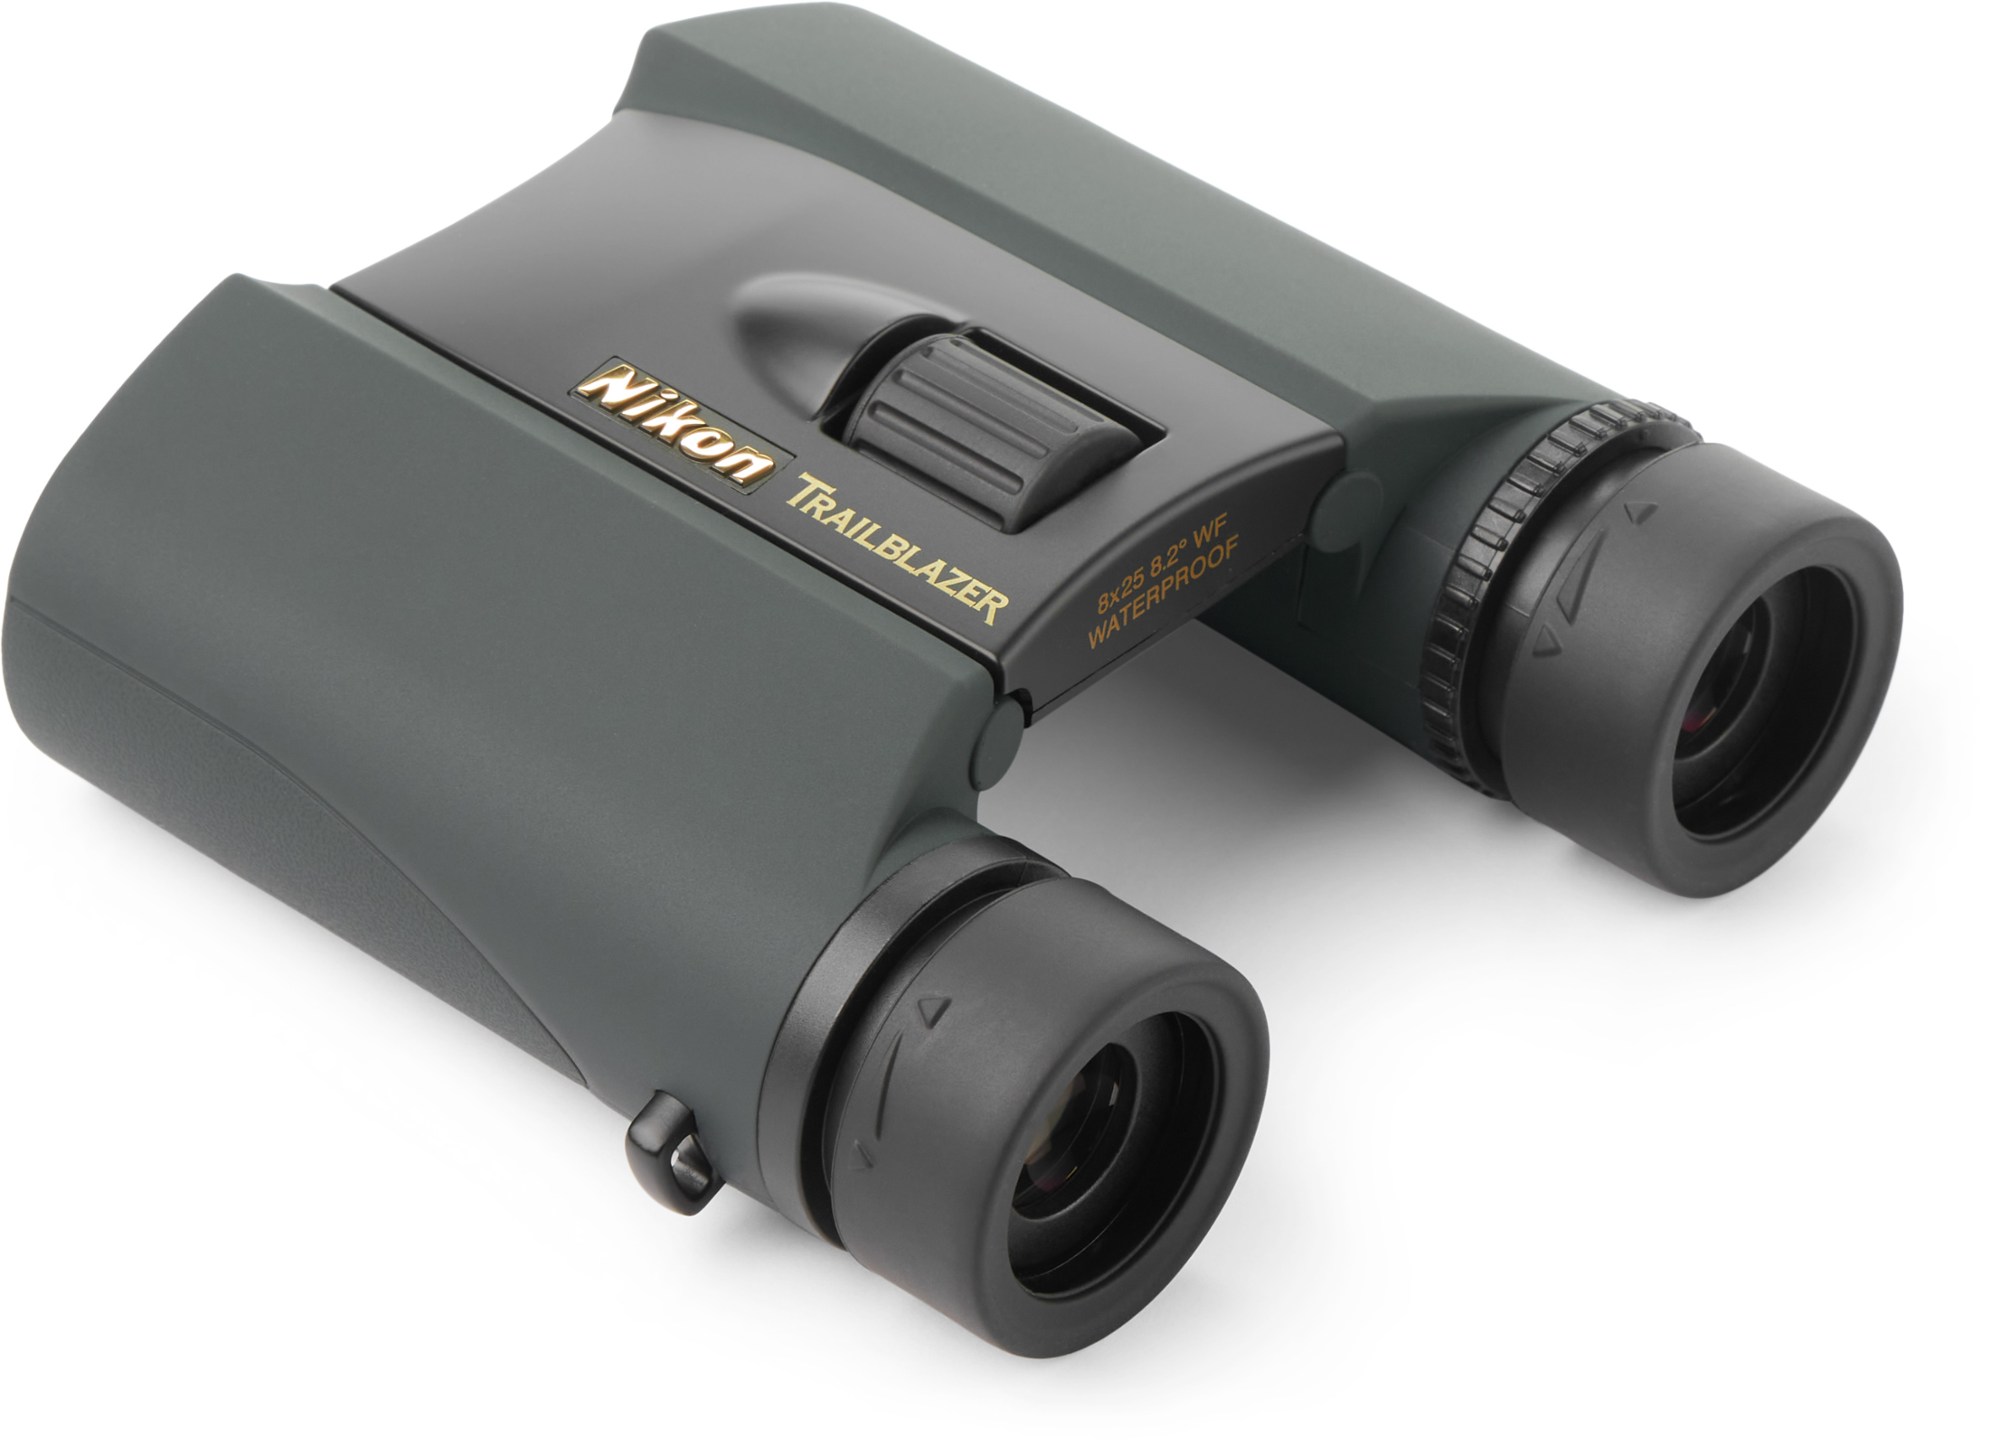 Nikon Traillazer 8x25 Compact Binoculars on sale at REI... $64.99